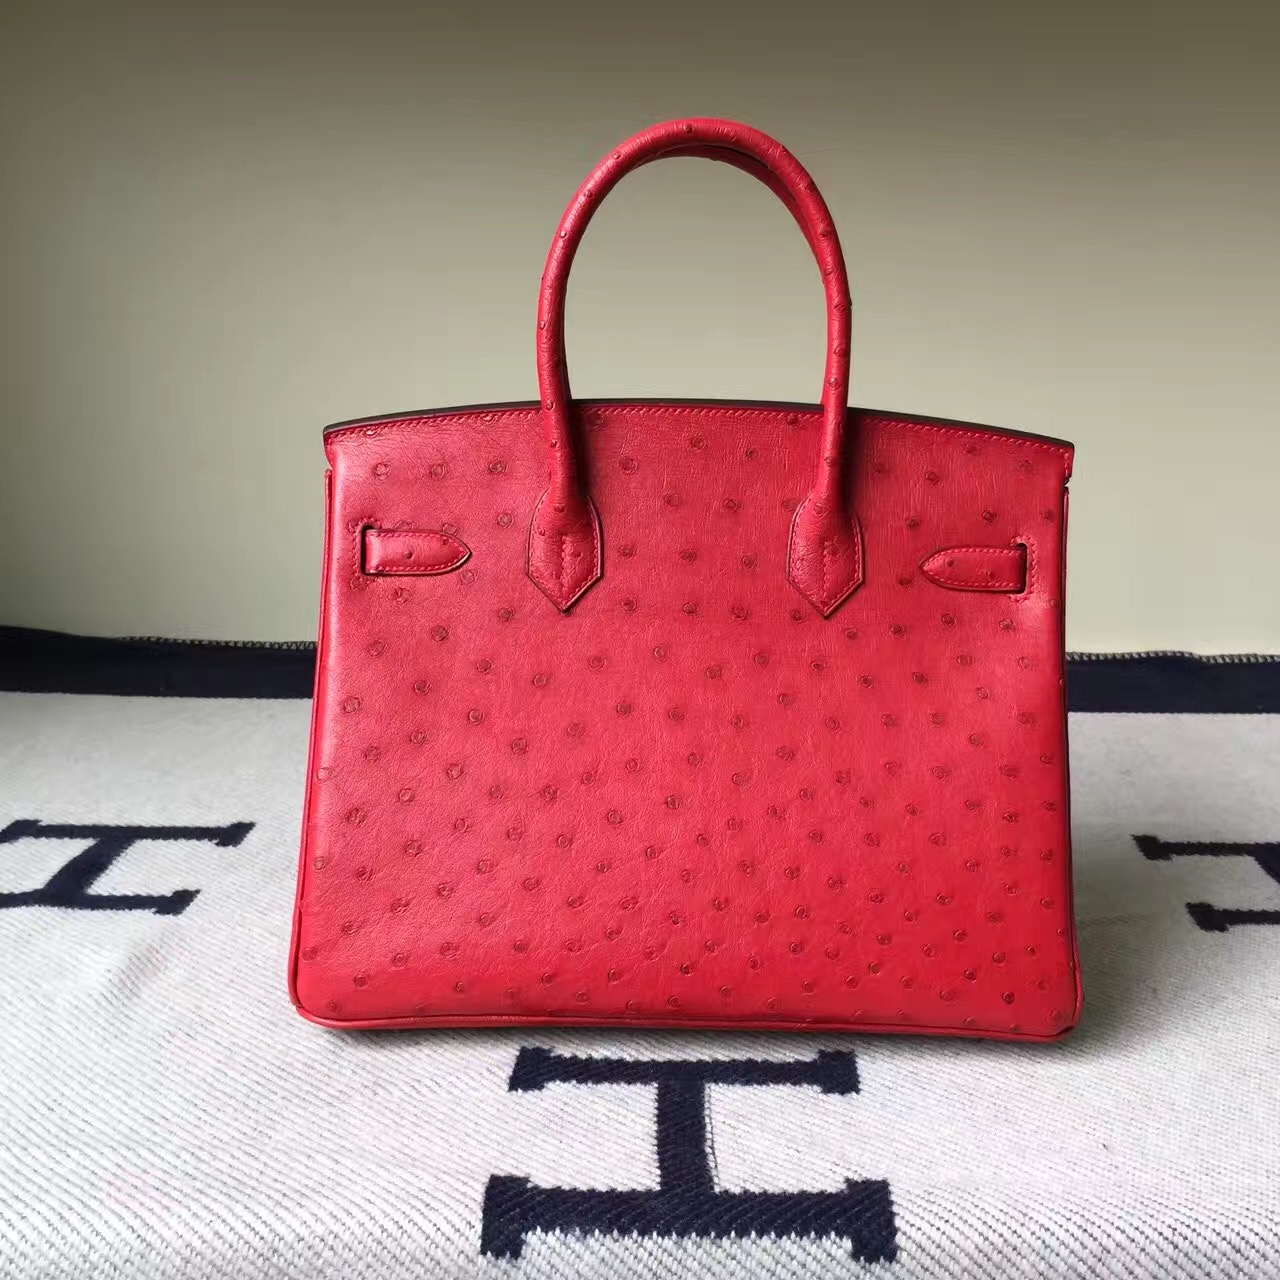 Discount Hermes Ostrich Leather Birkin30cm Bag in Q5 Rouge Casaque